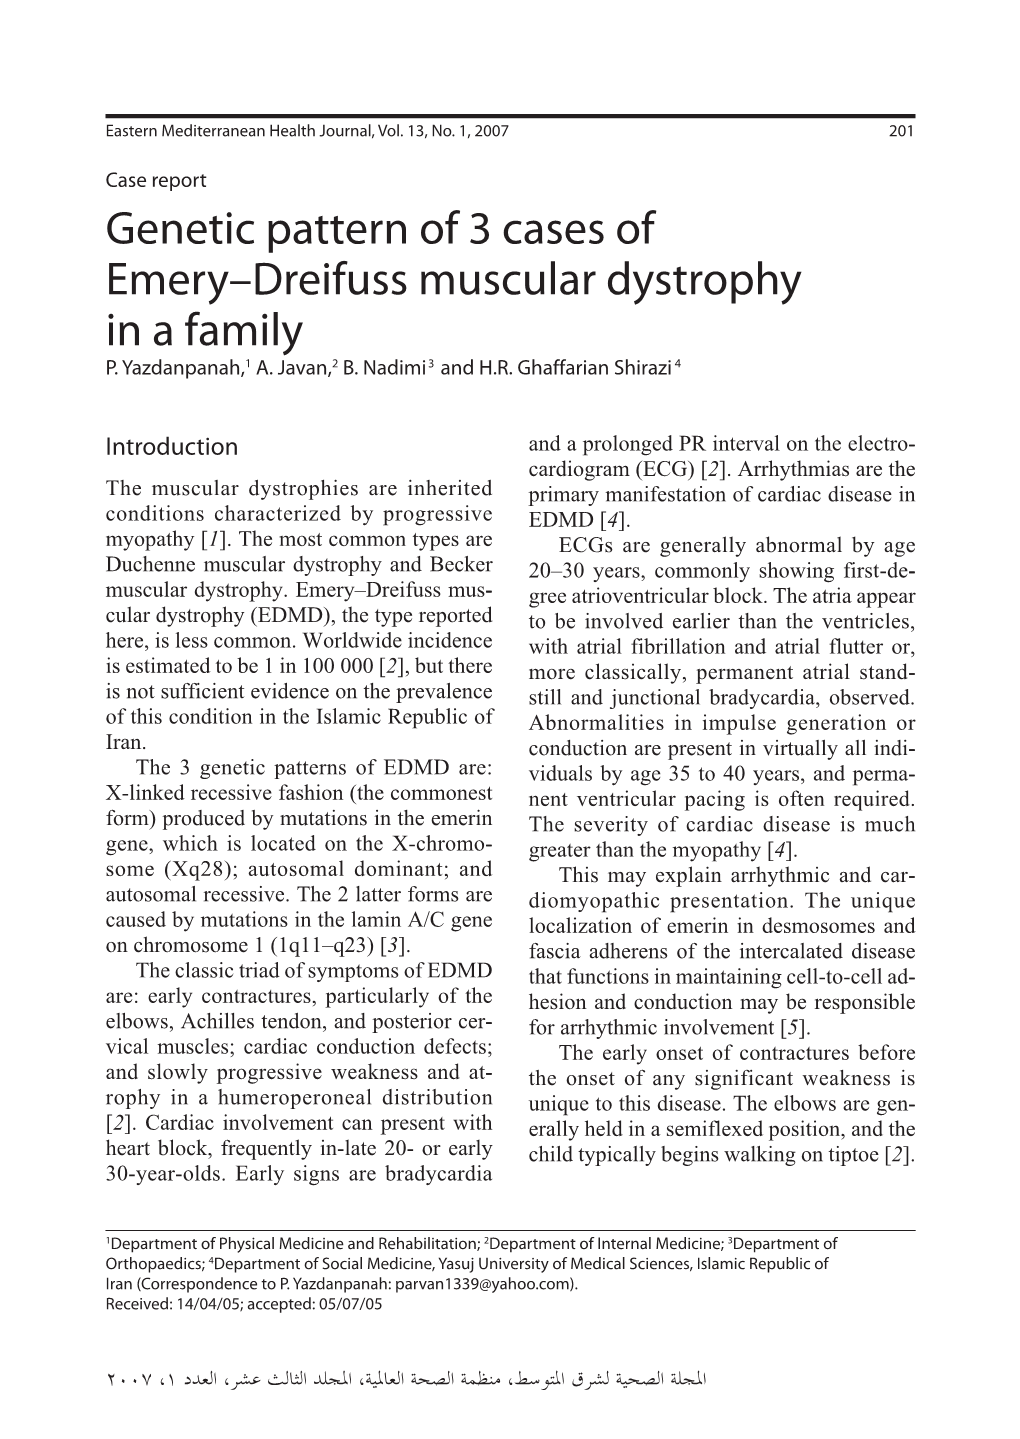 Genetic Pattern of 3 Cases of Emery–Dreifuss Muscular Dystrophy in a Family P